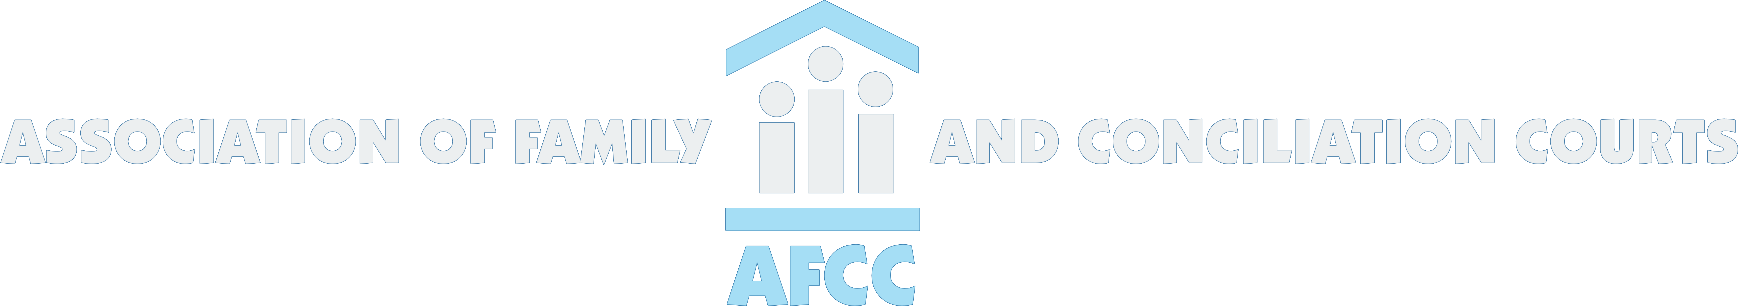 AFCC 15th Symposium on Child Custody